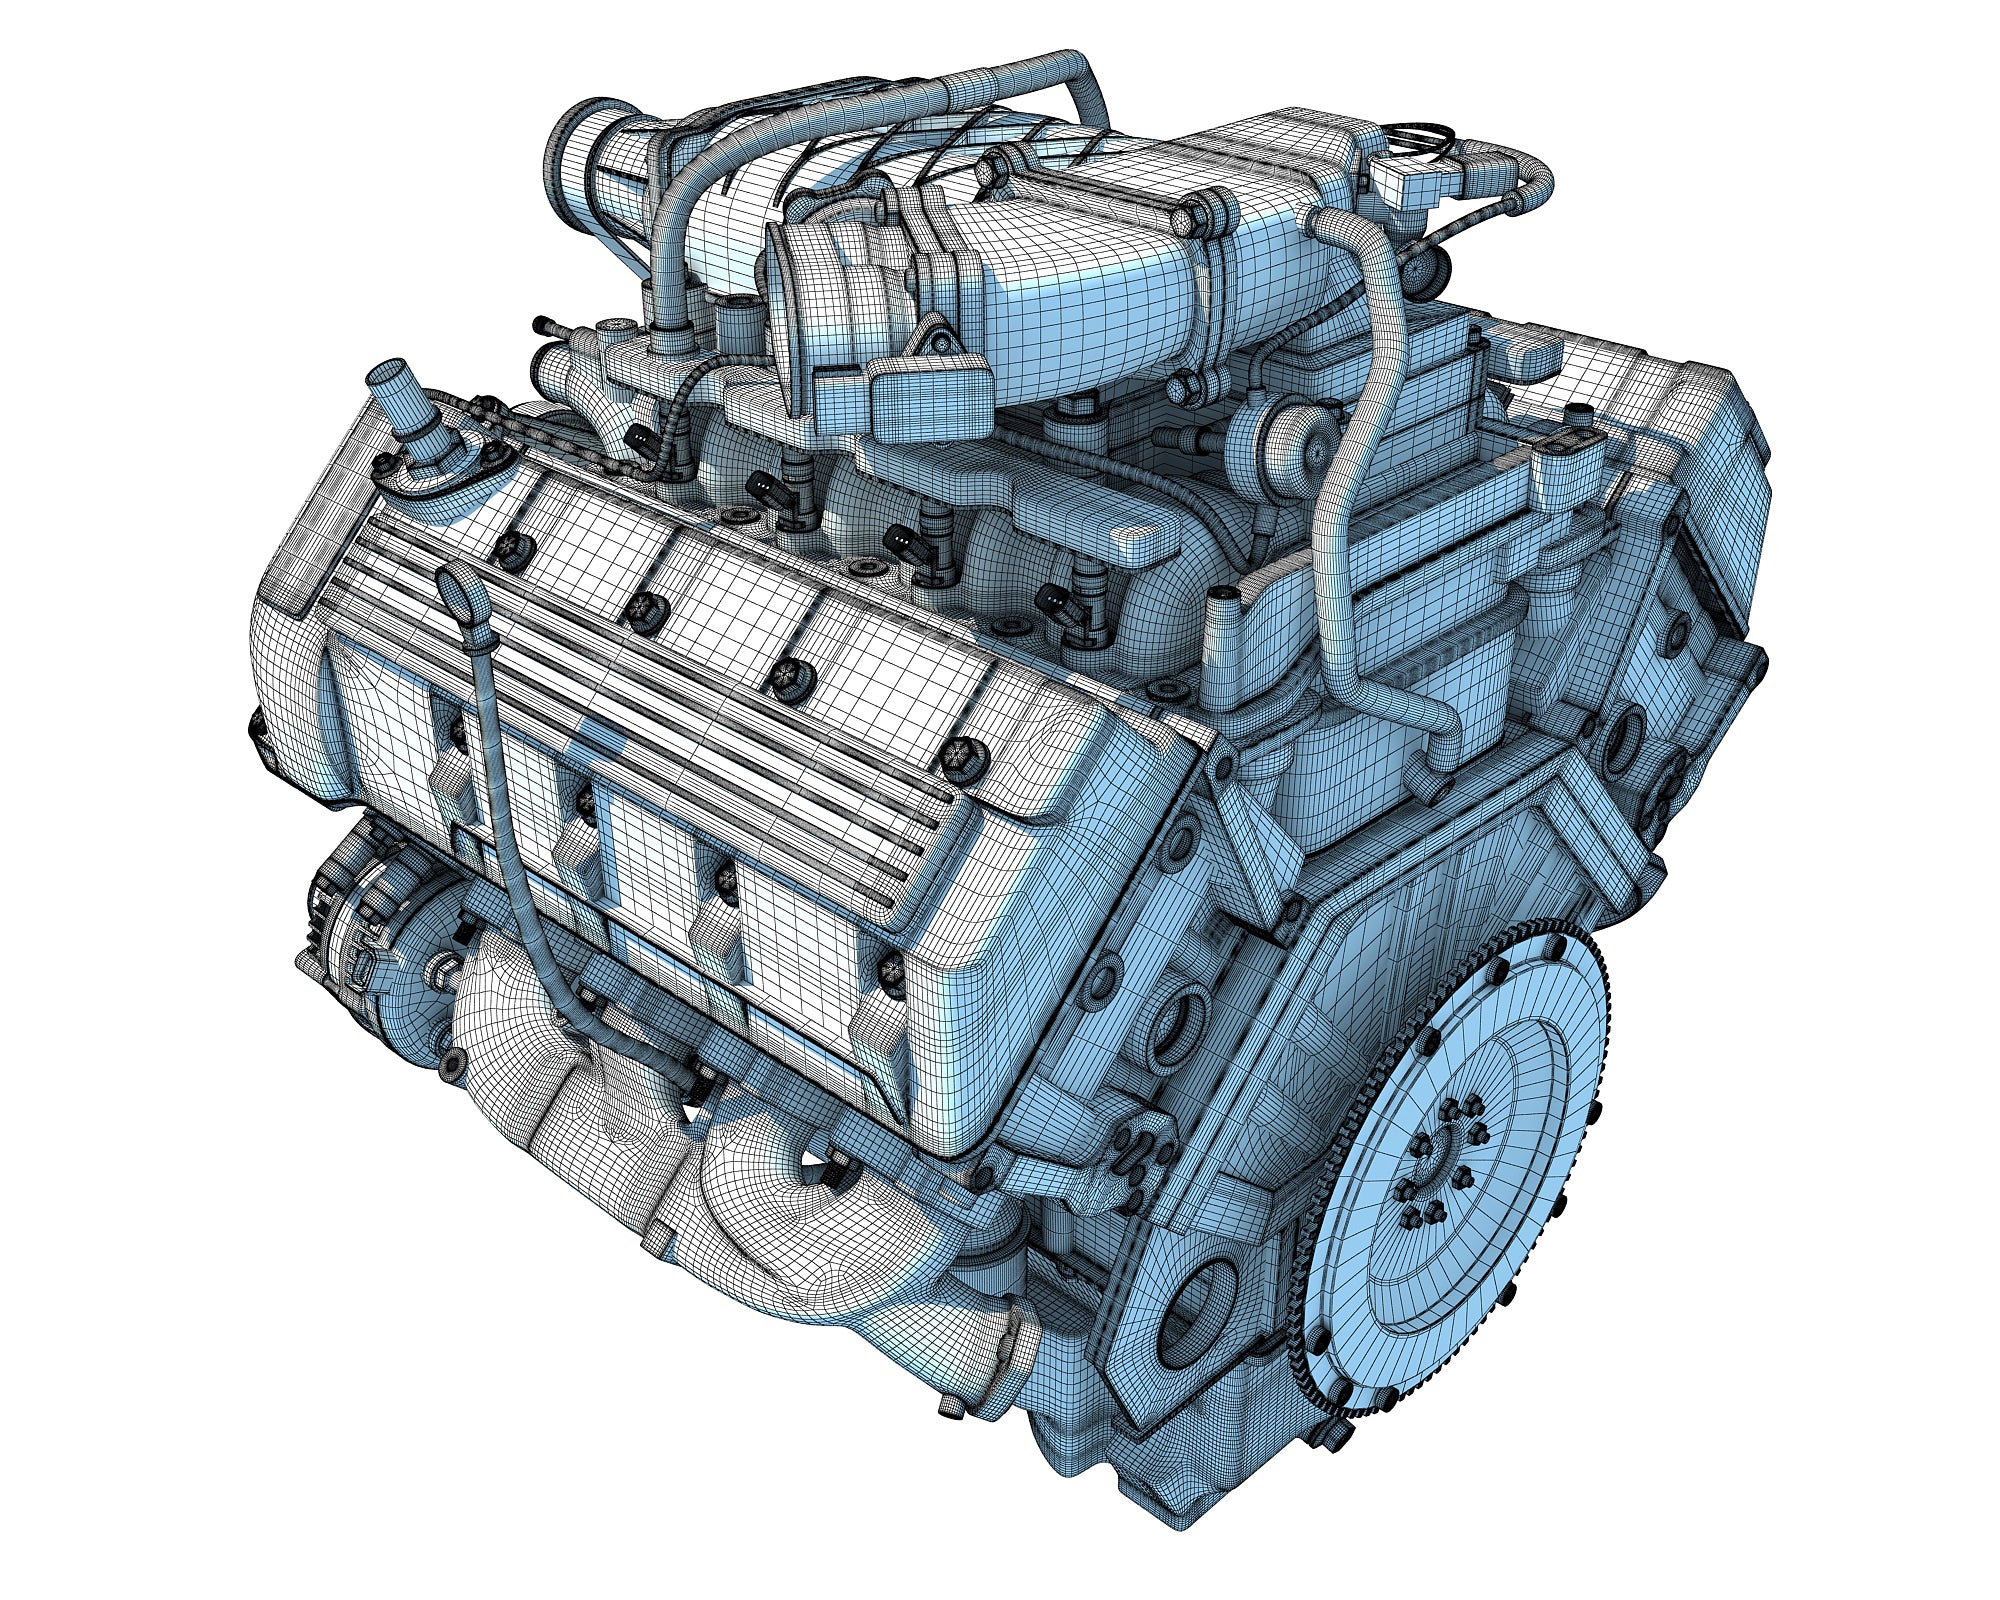 Animated Engine 3D Models